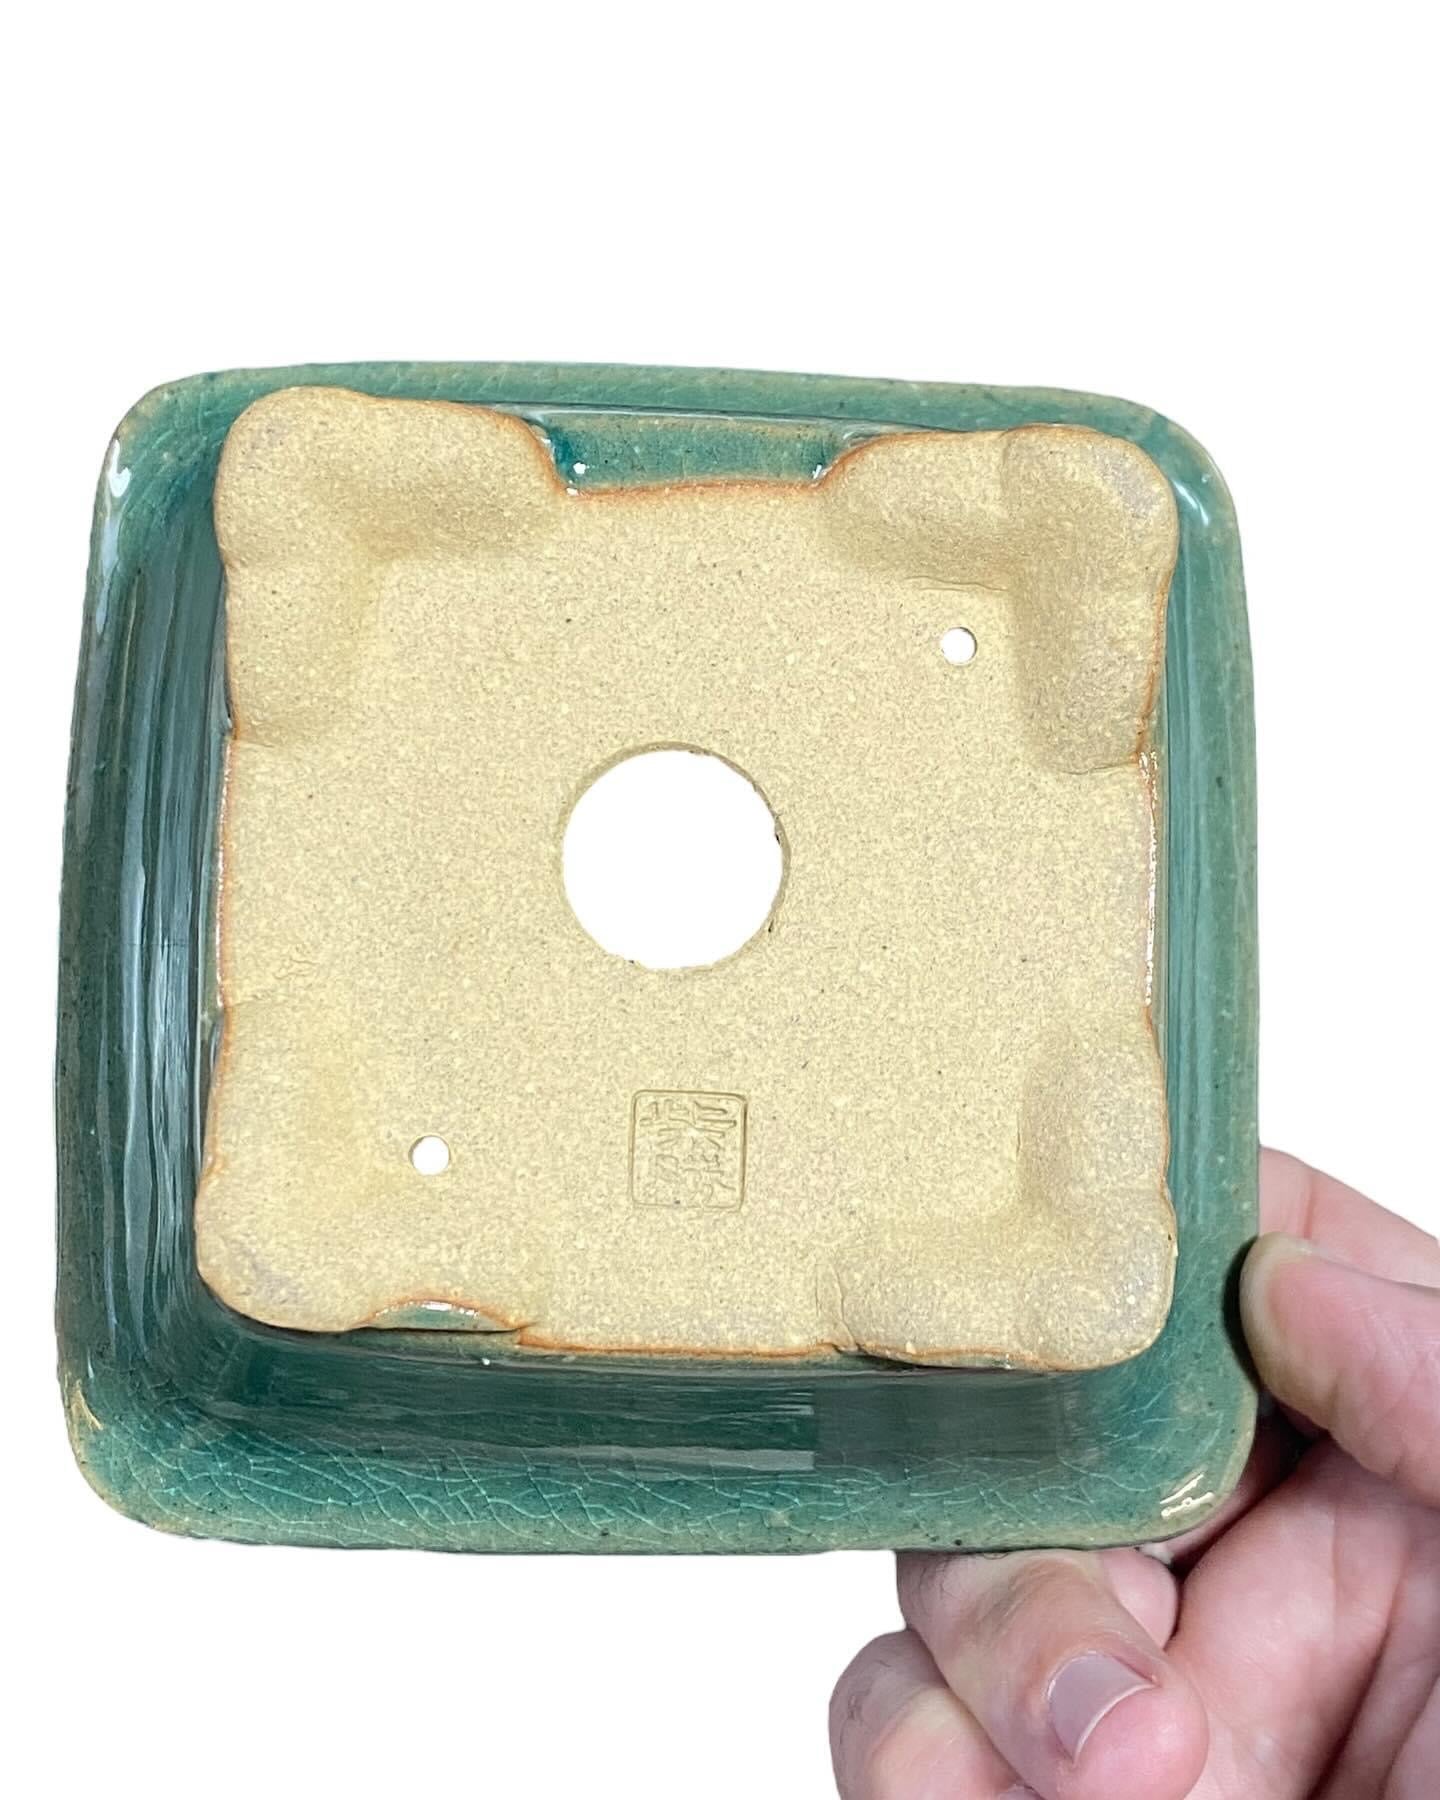 Shibakatsu - Exhibition Quality Crackle Glazed Bonsai Pot (4-7/8” wide)